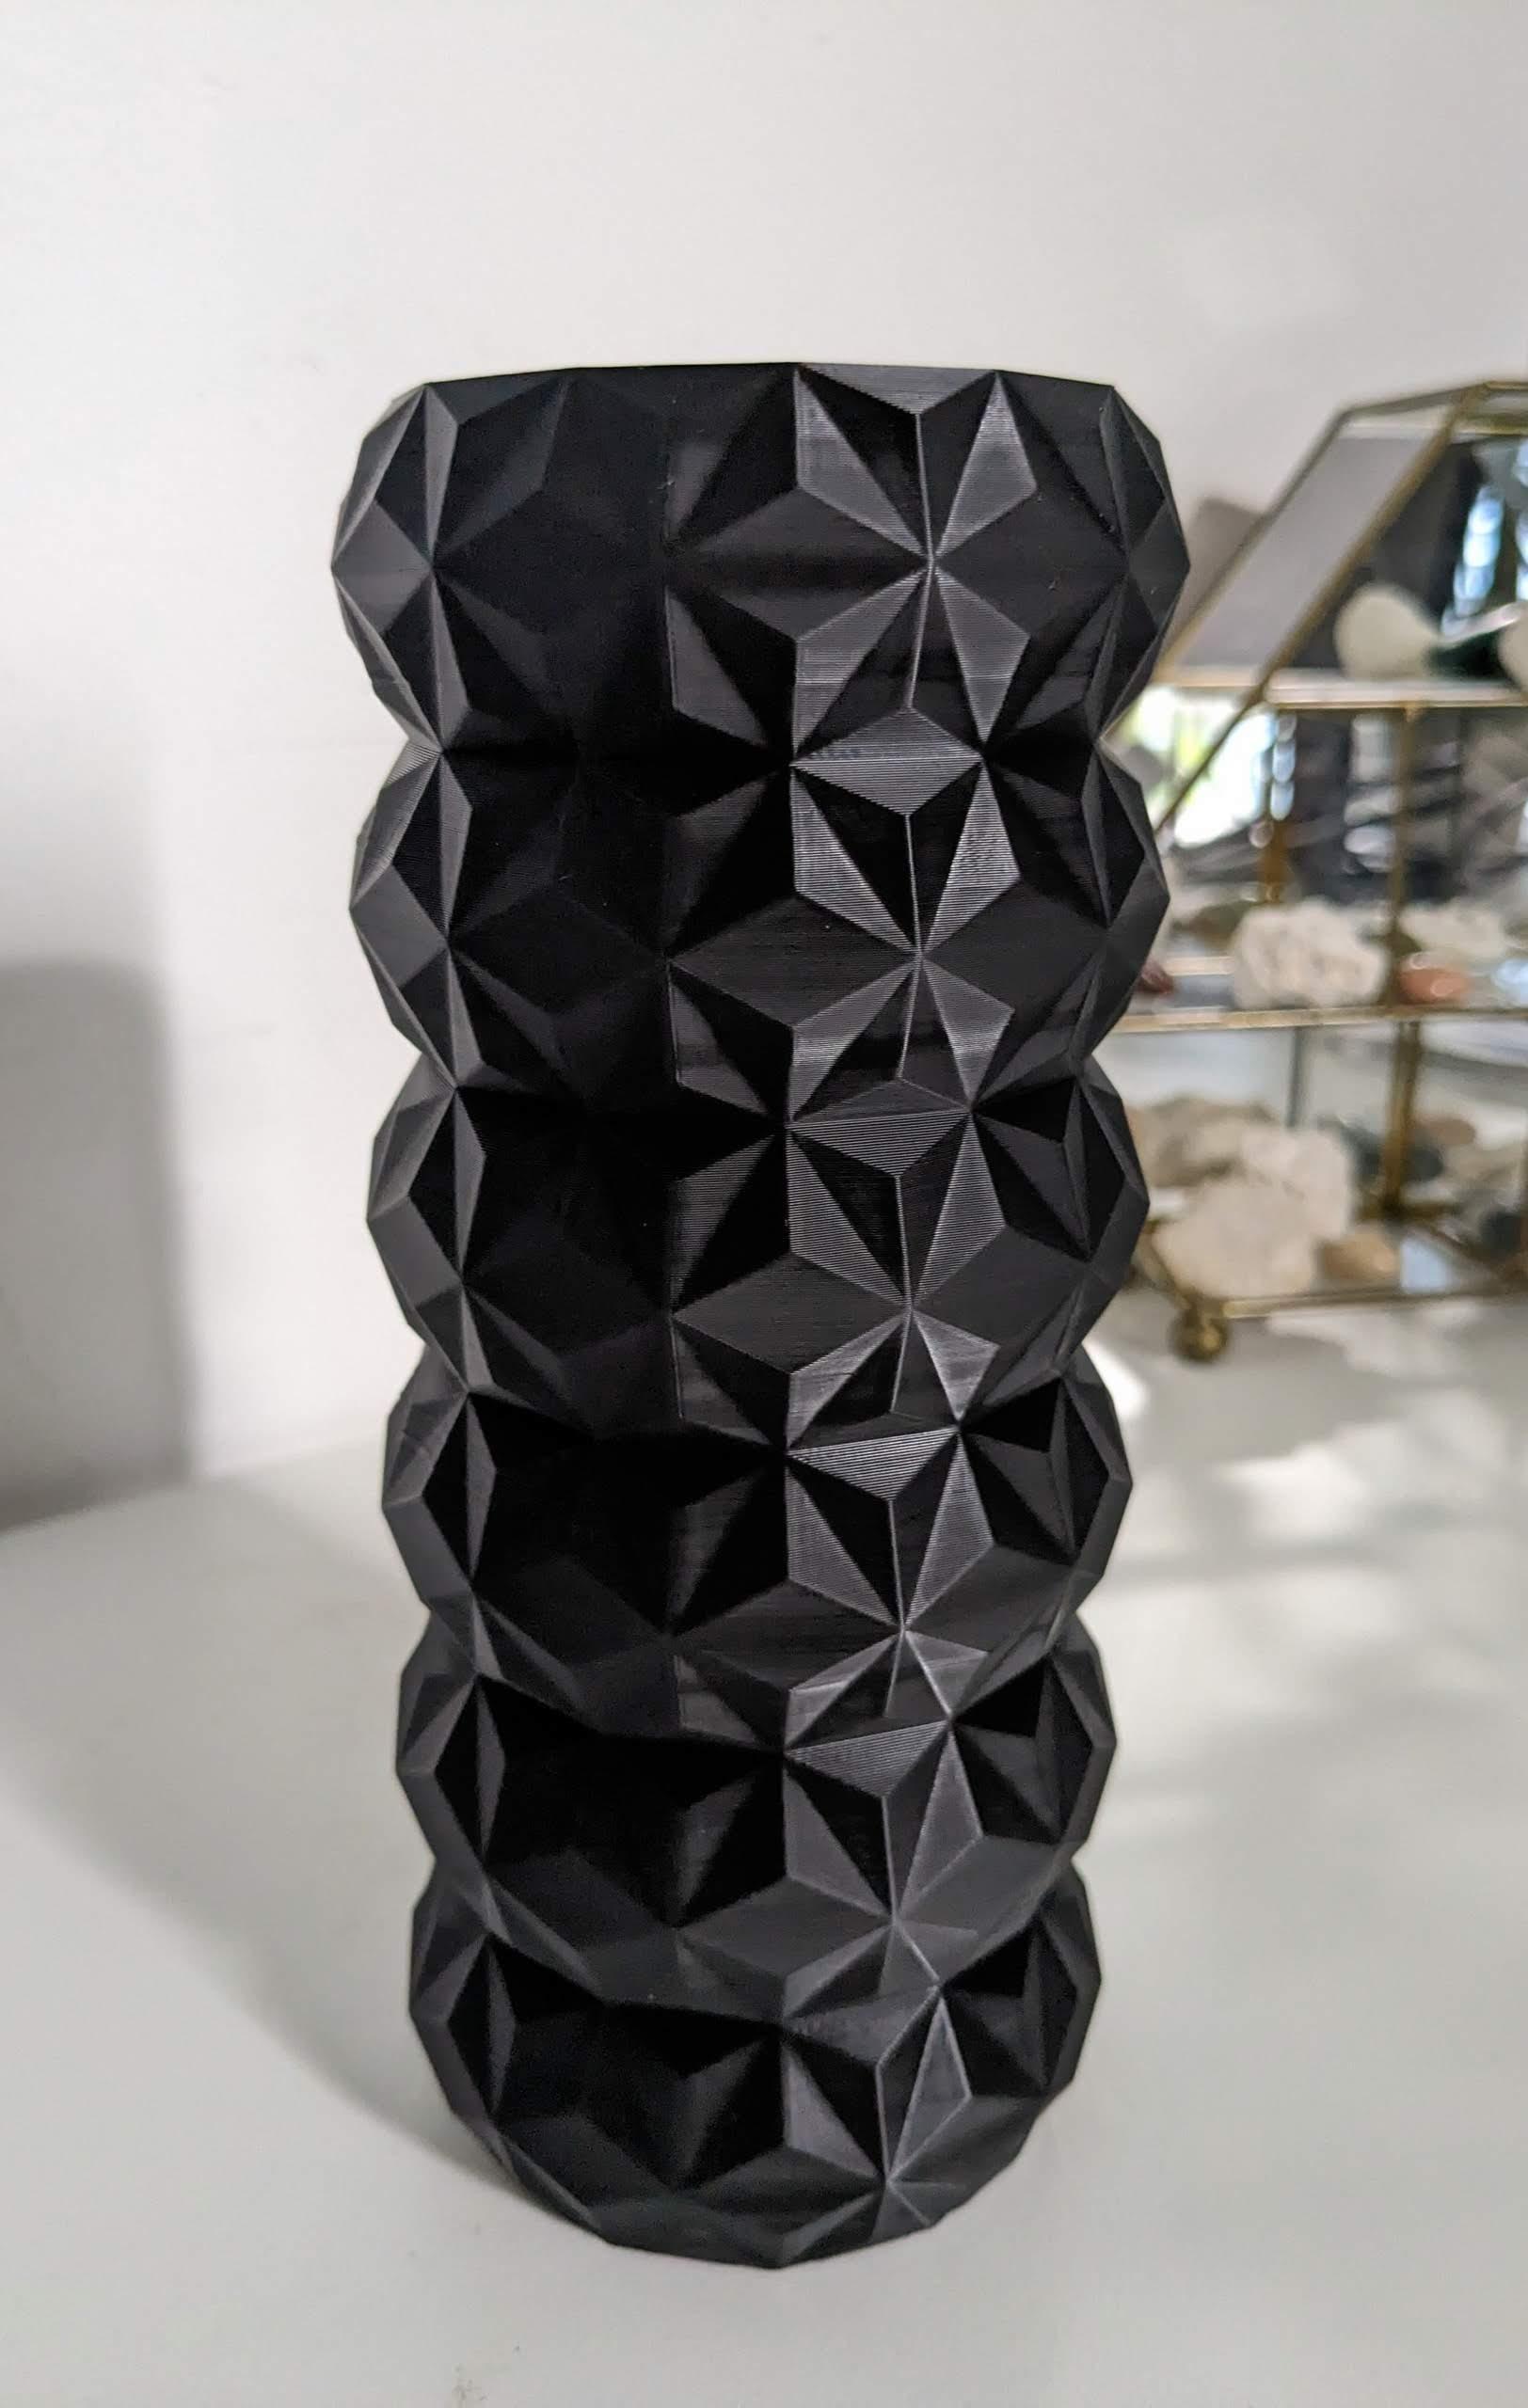 Low poly Vase "off road tire" 3d model